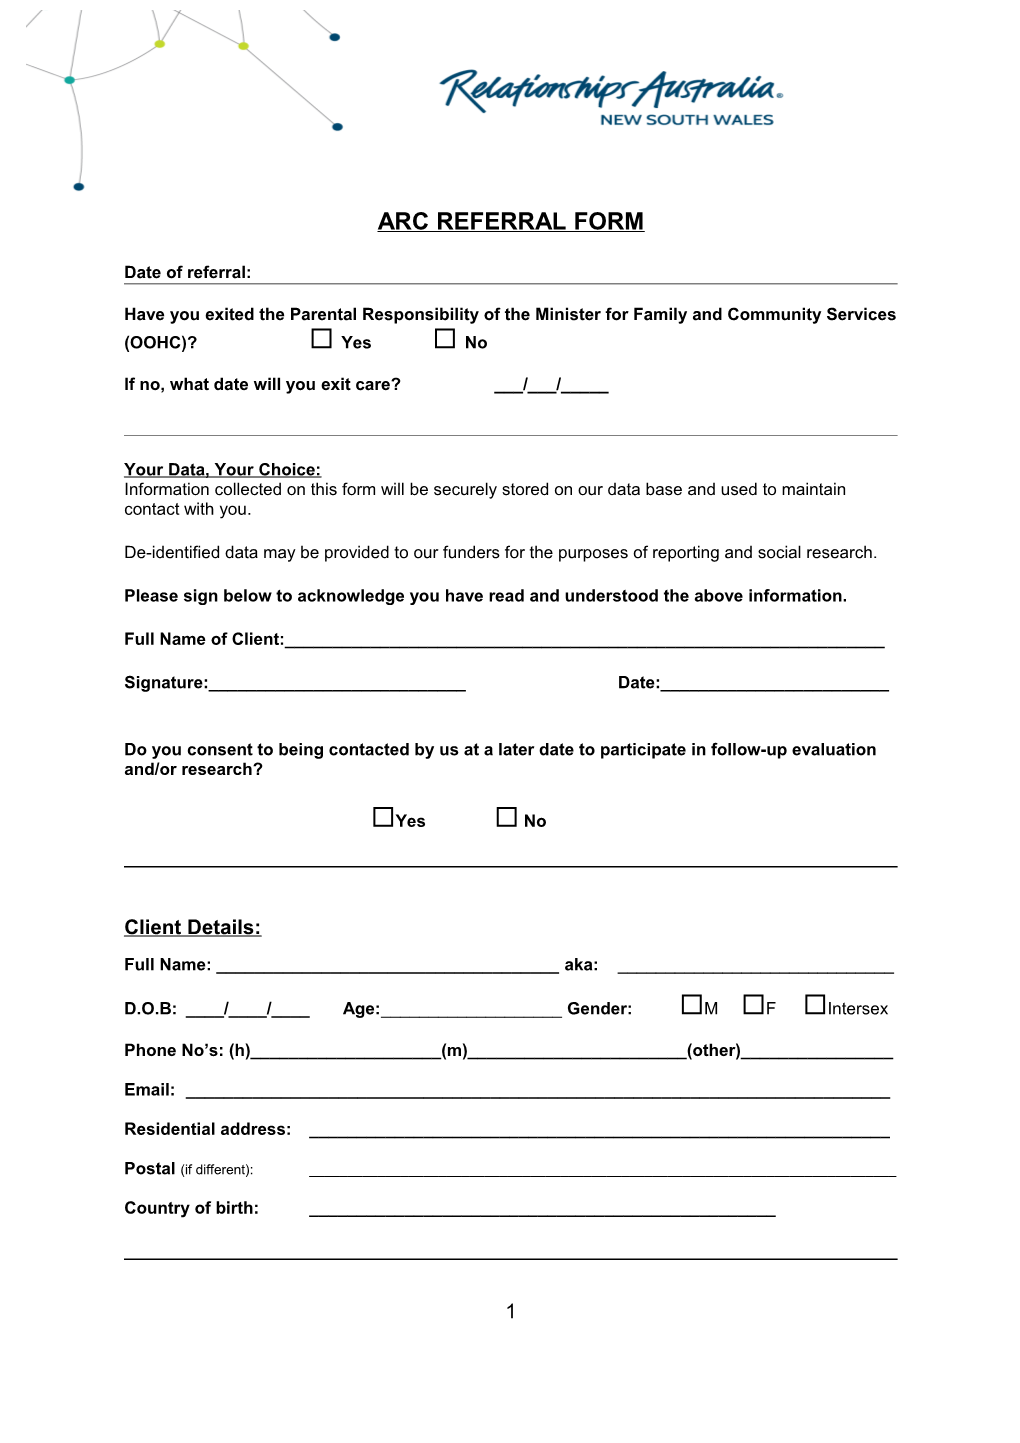 Arc Client Referral Form